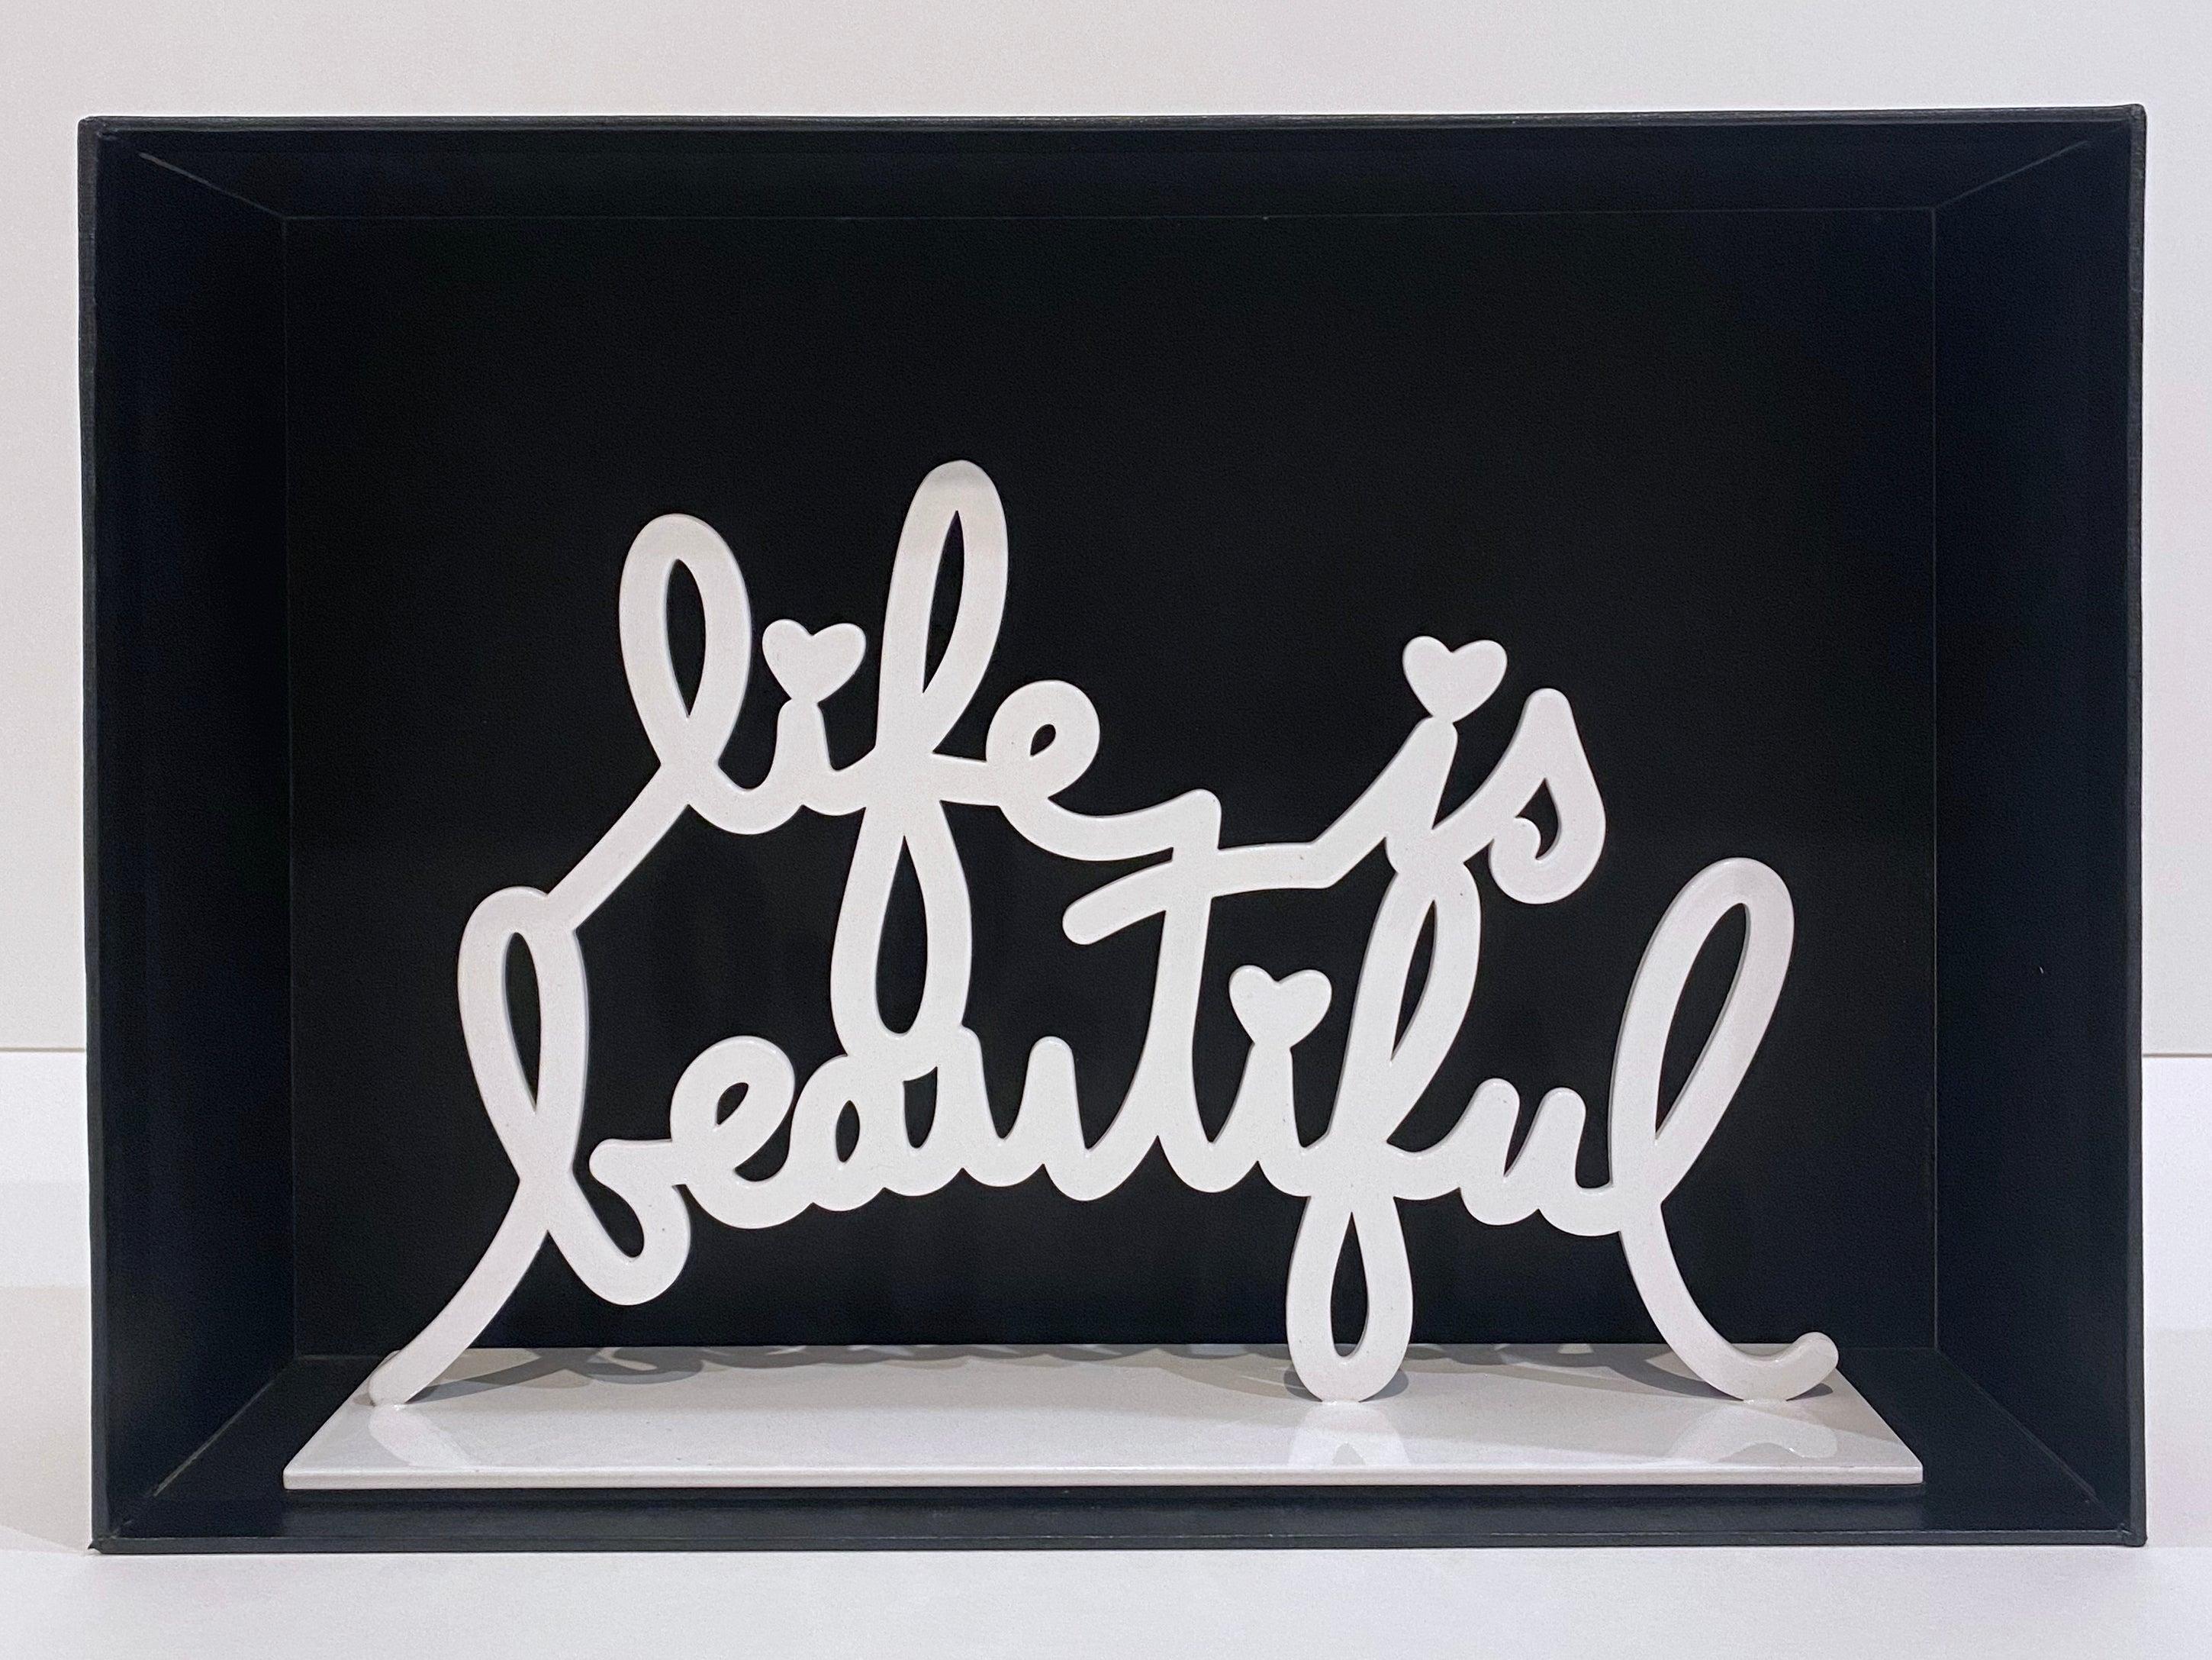 Life is Beautiful (White) - Street Art Sculpture by Mr. Brainwash